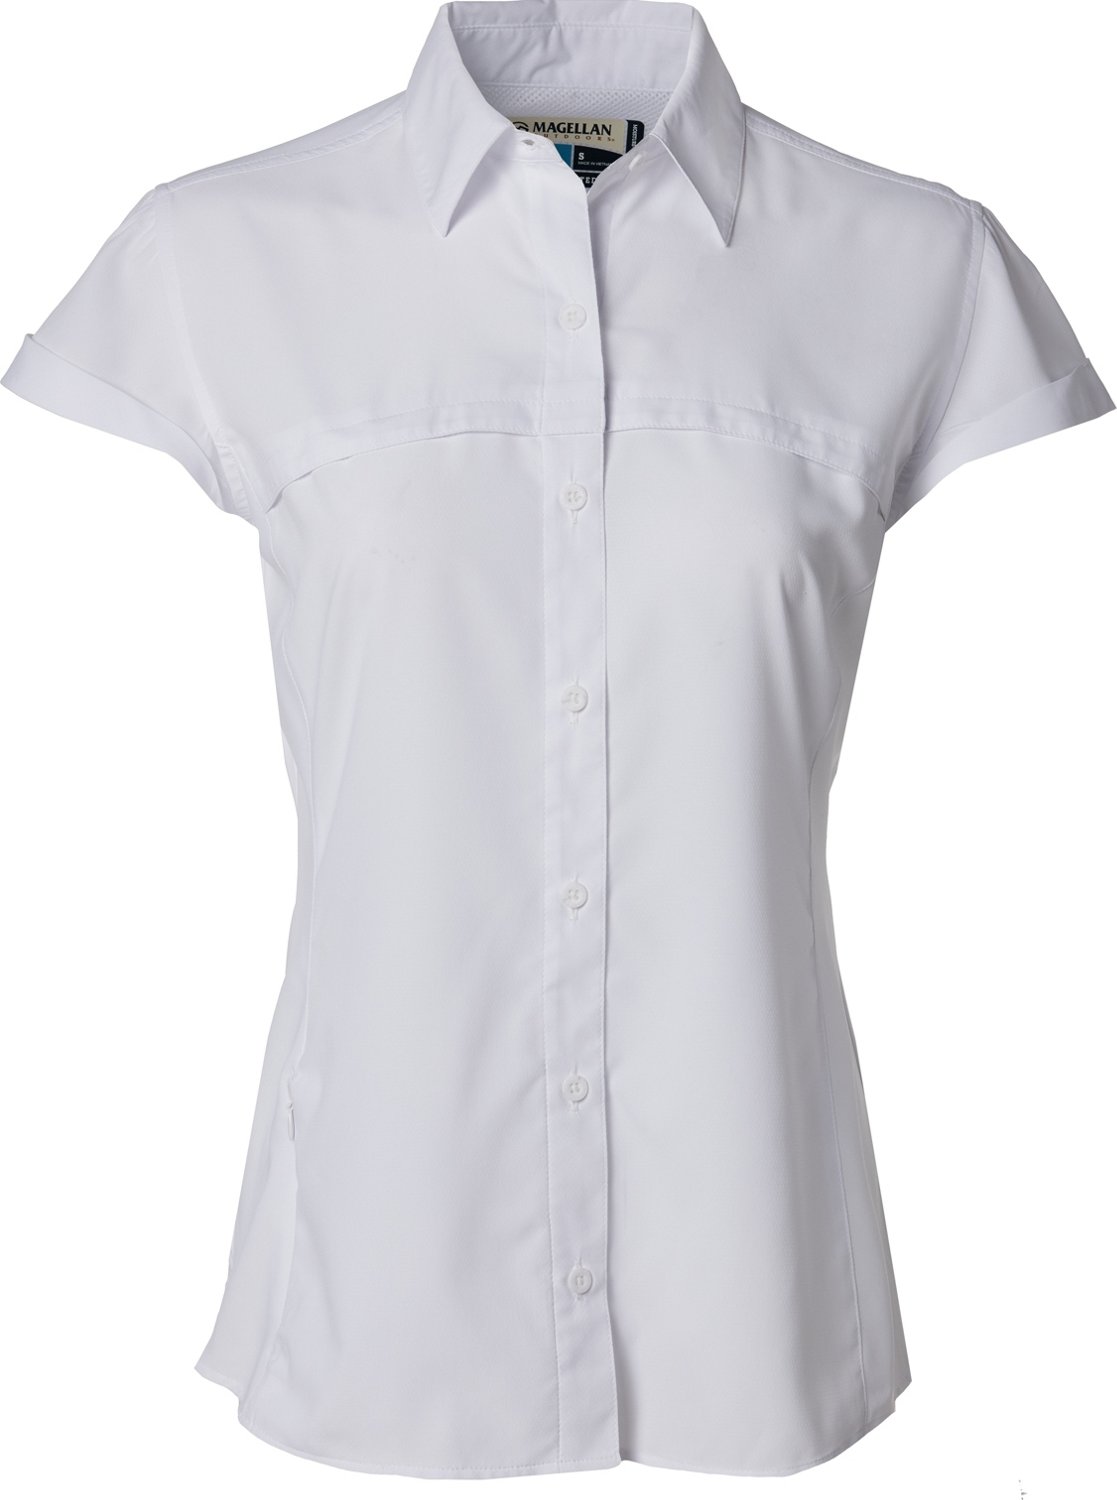 Habit Womens Short Sleeve Fishing Button Down Shirt Size Medium Grey 